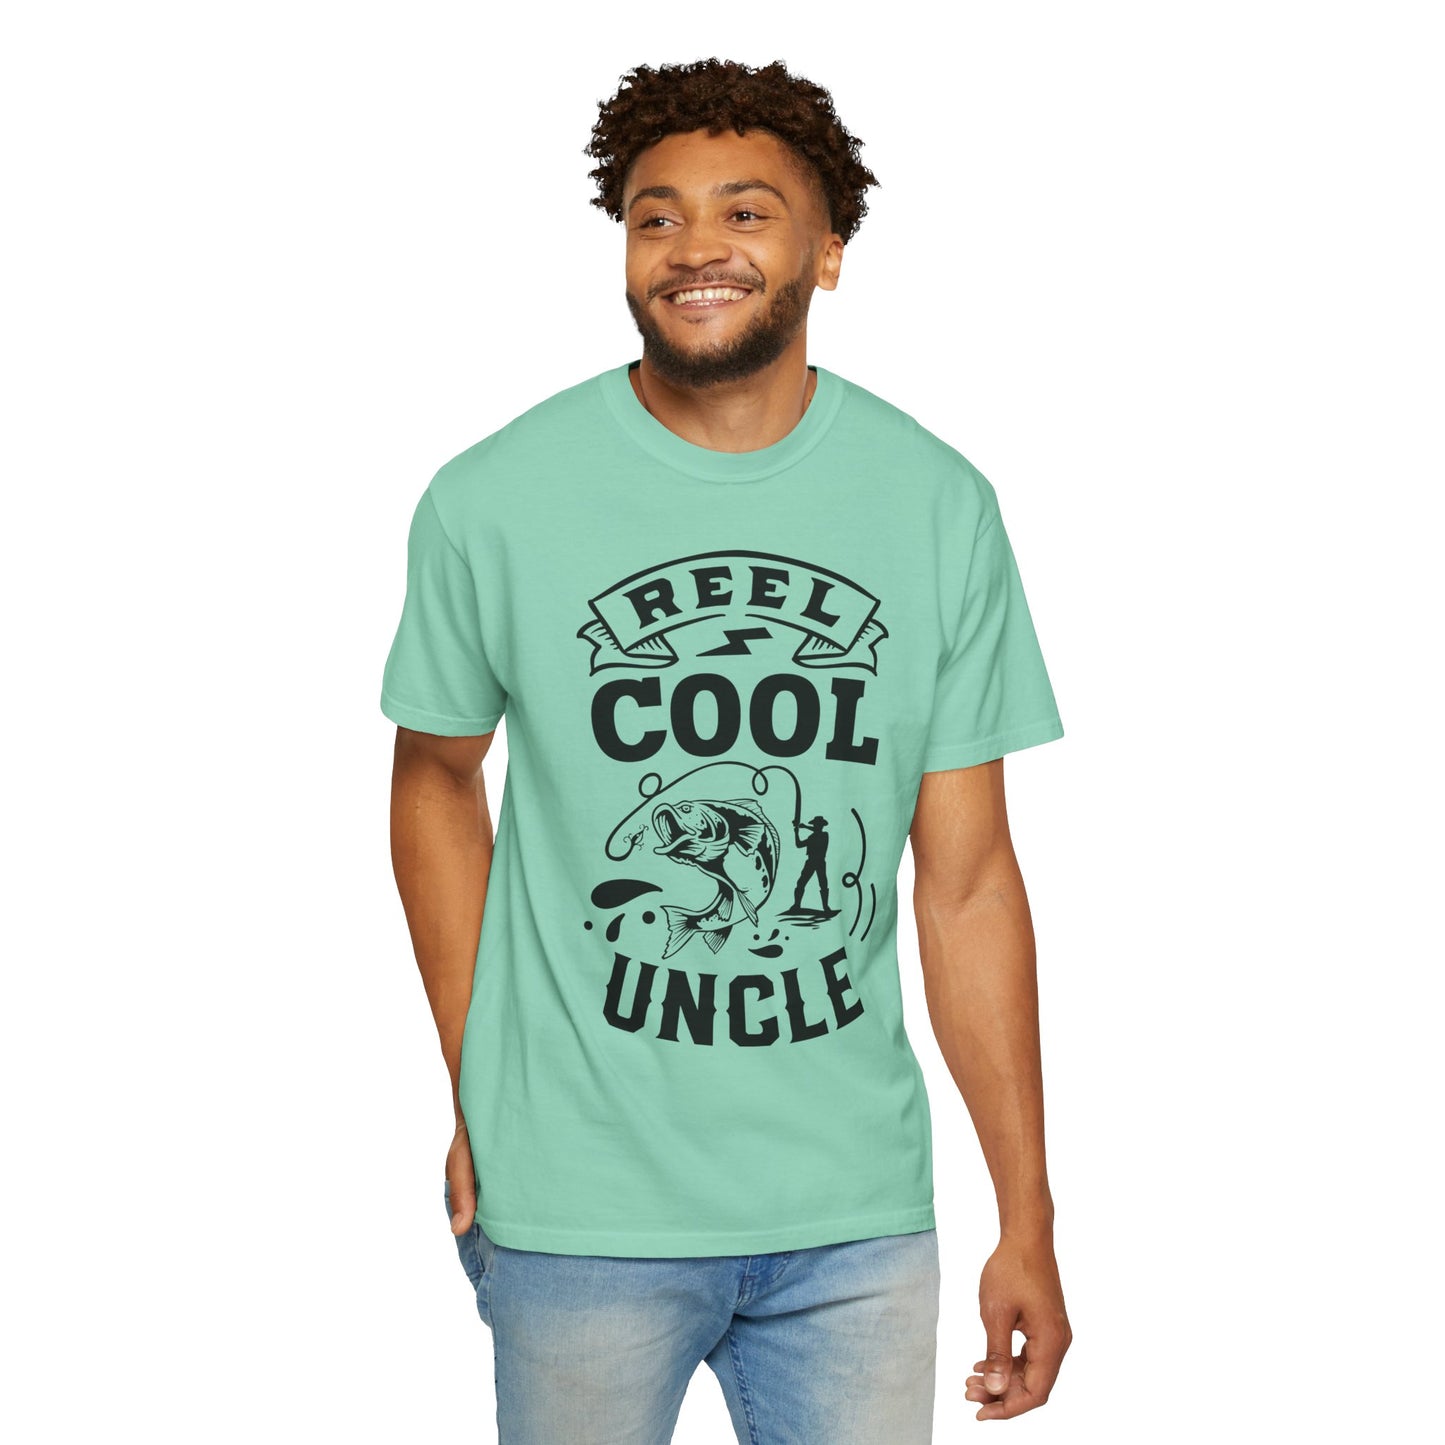 Reel cool uncle: Unisex Garment-Dyed T-shirt